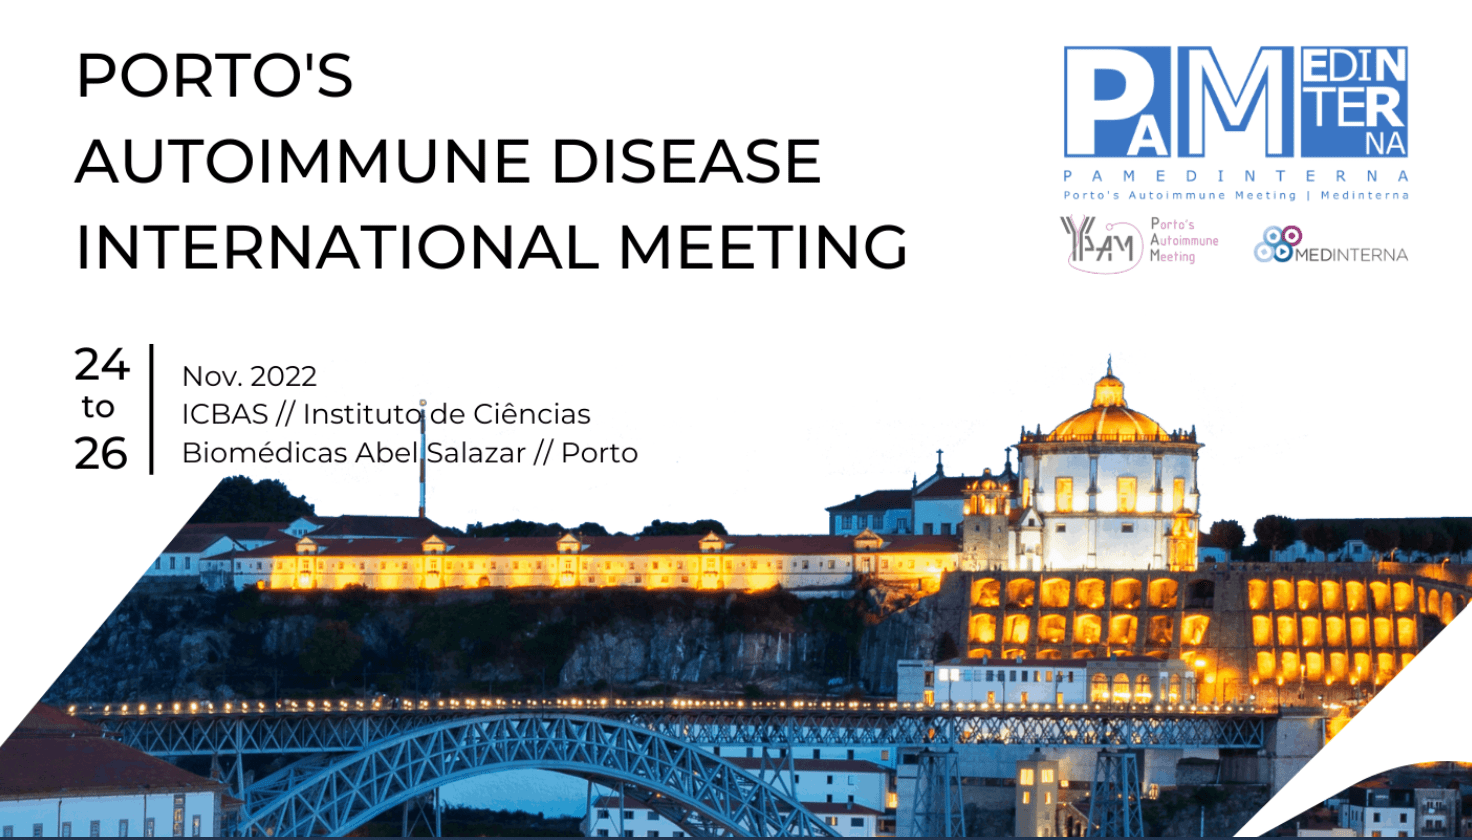 PAMEDINTERNA – Programa Porto’s Autoimmune Meeting Medinterna 2022